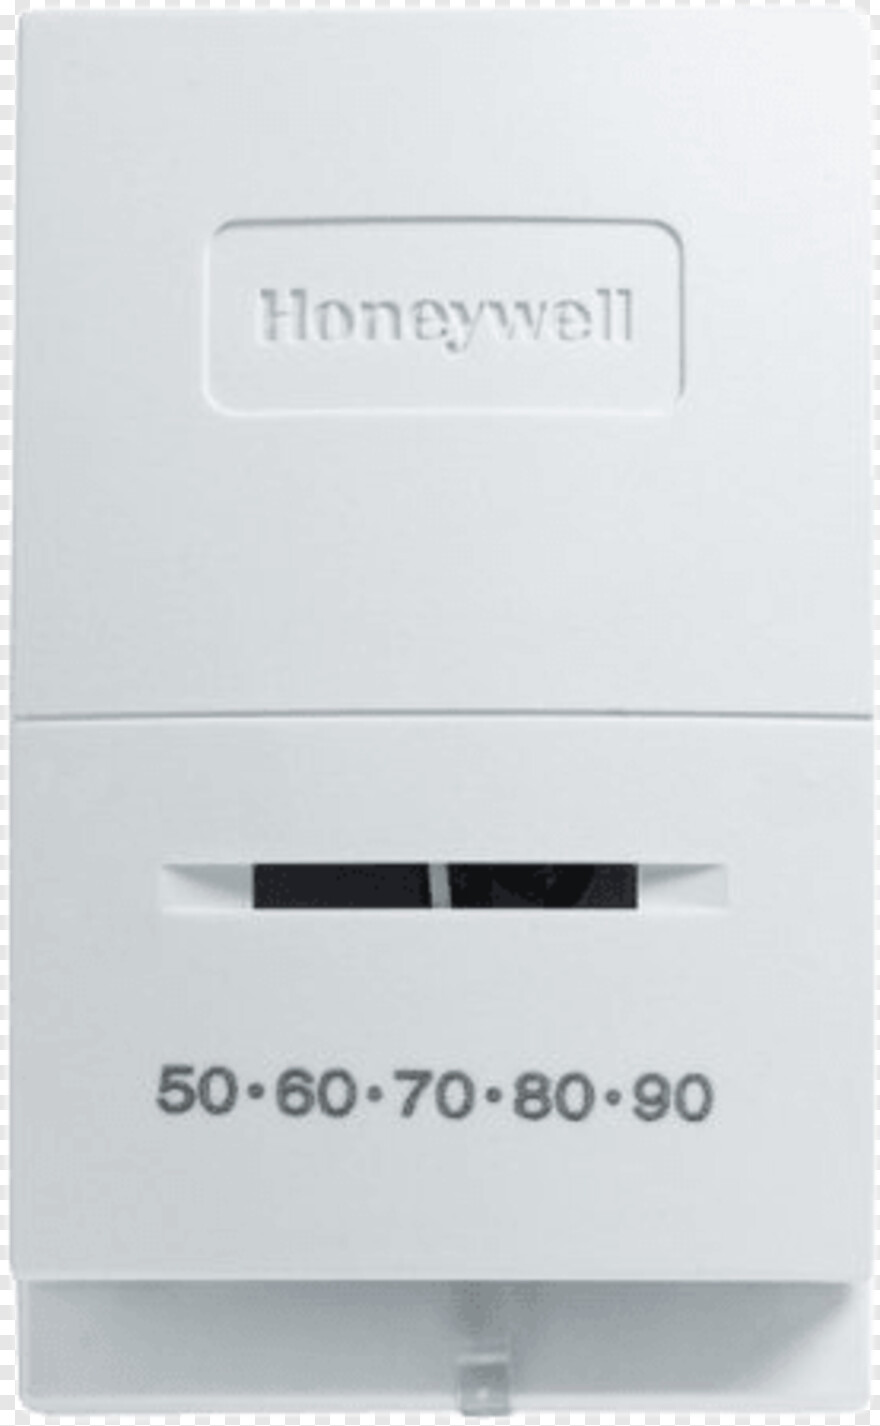 honeywell-logo # 523630